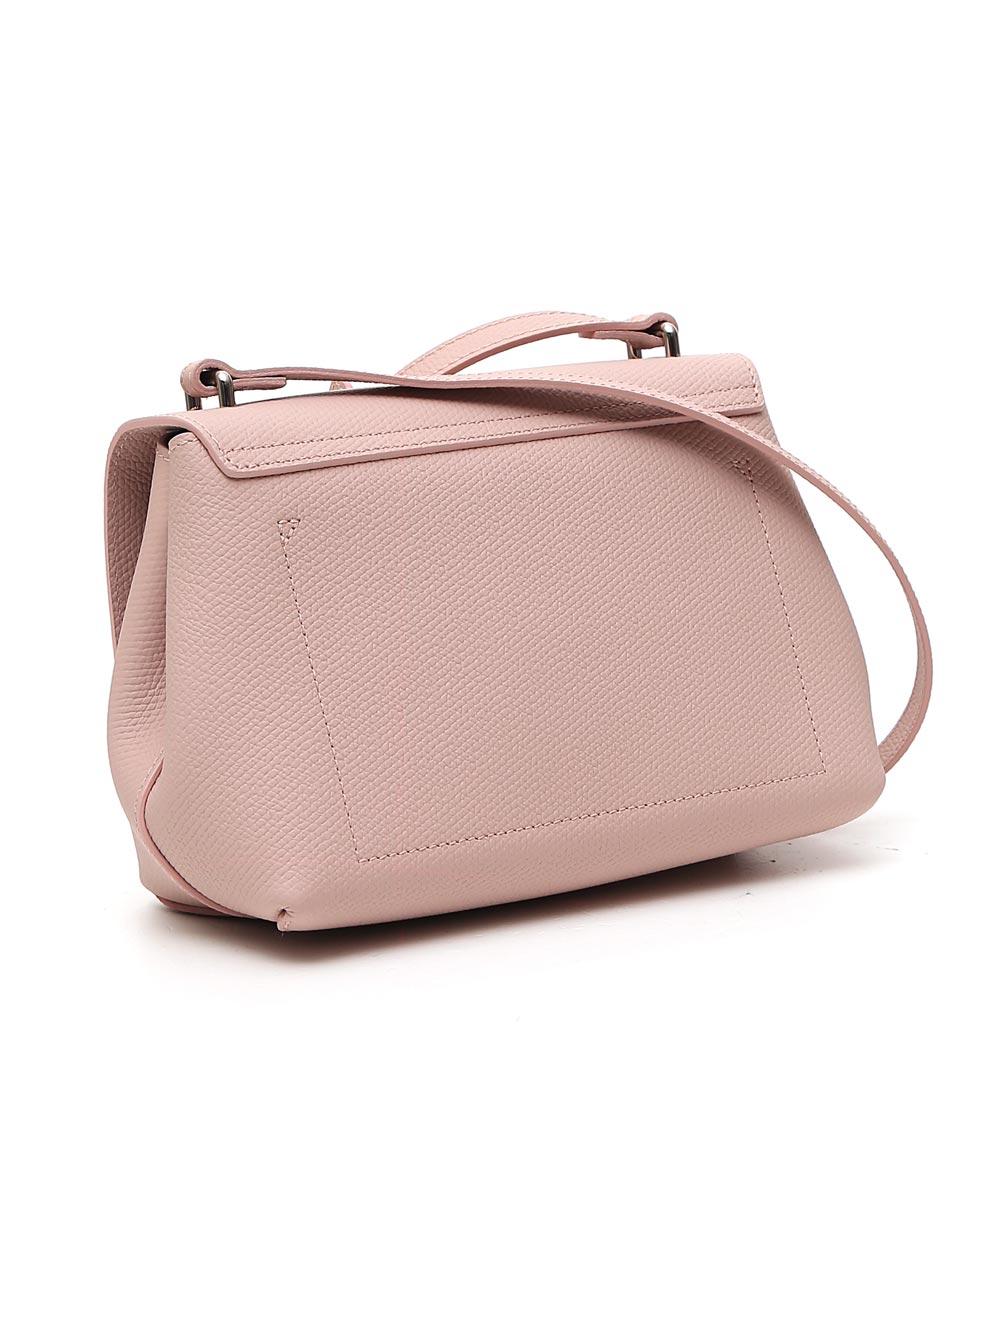 Longchamp Roseau Foldover Top Crossbody Bag in Pink